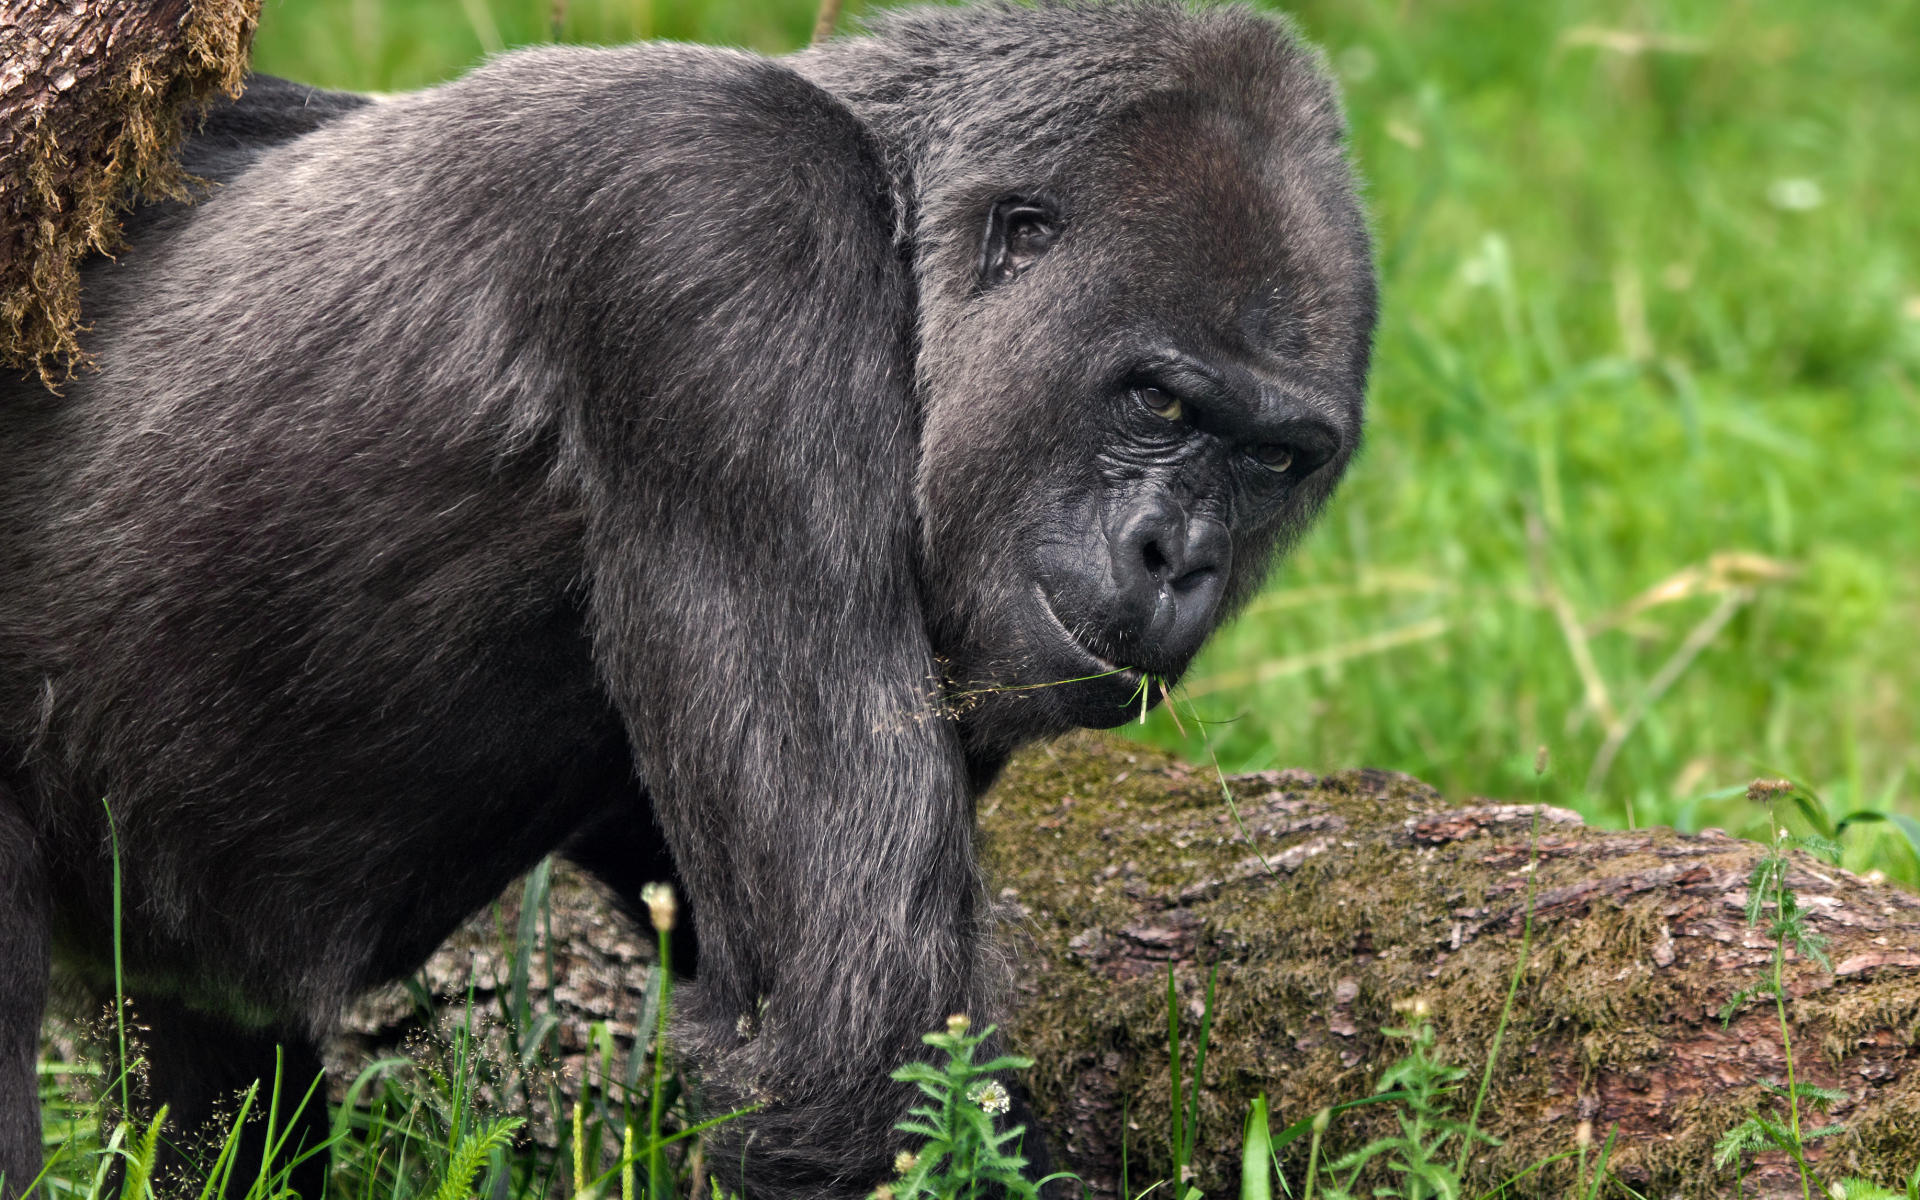 Big black gorilla walks on the grass